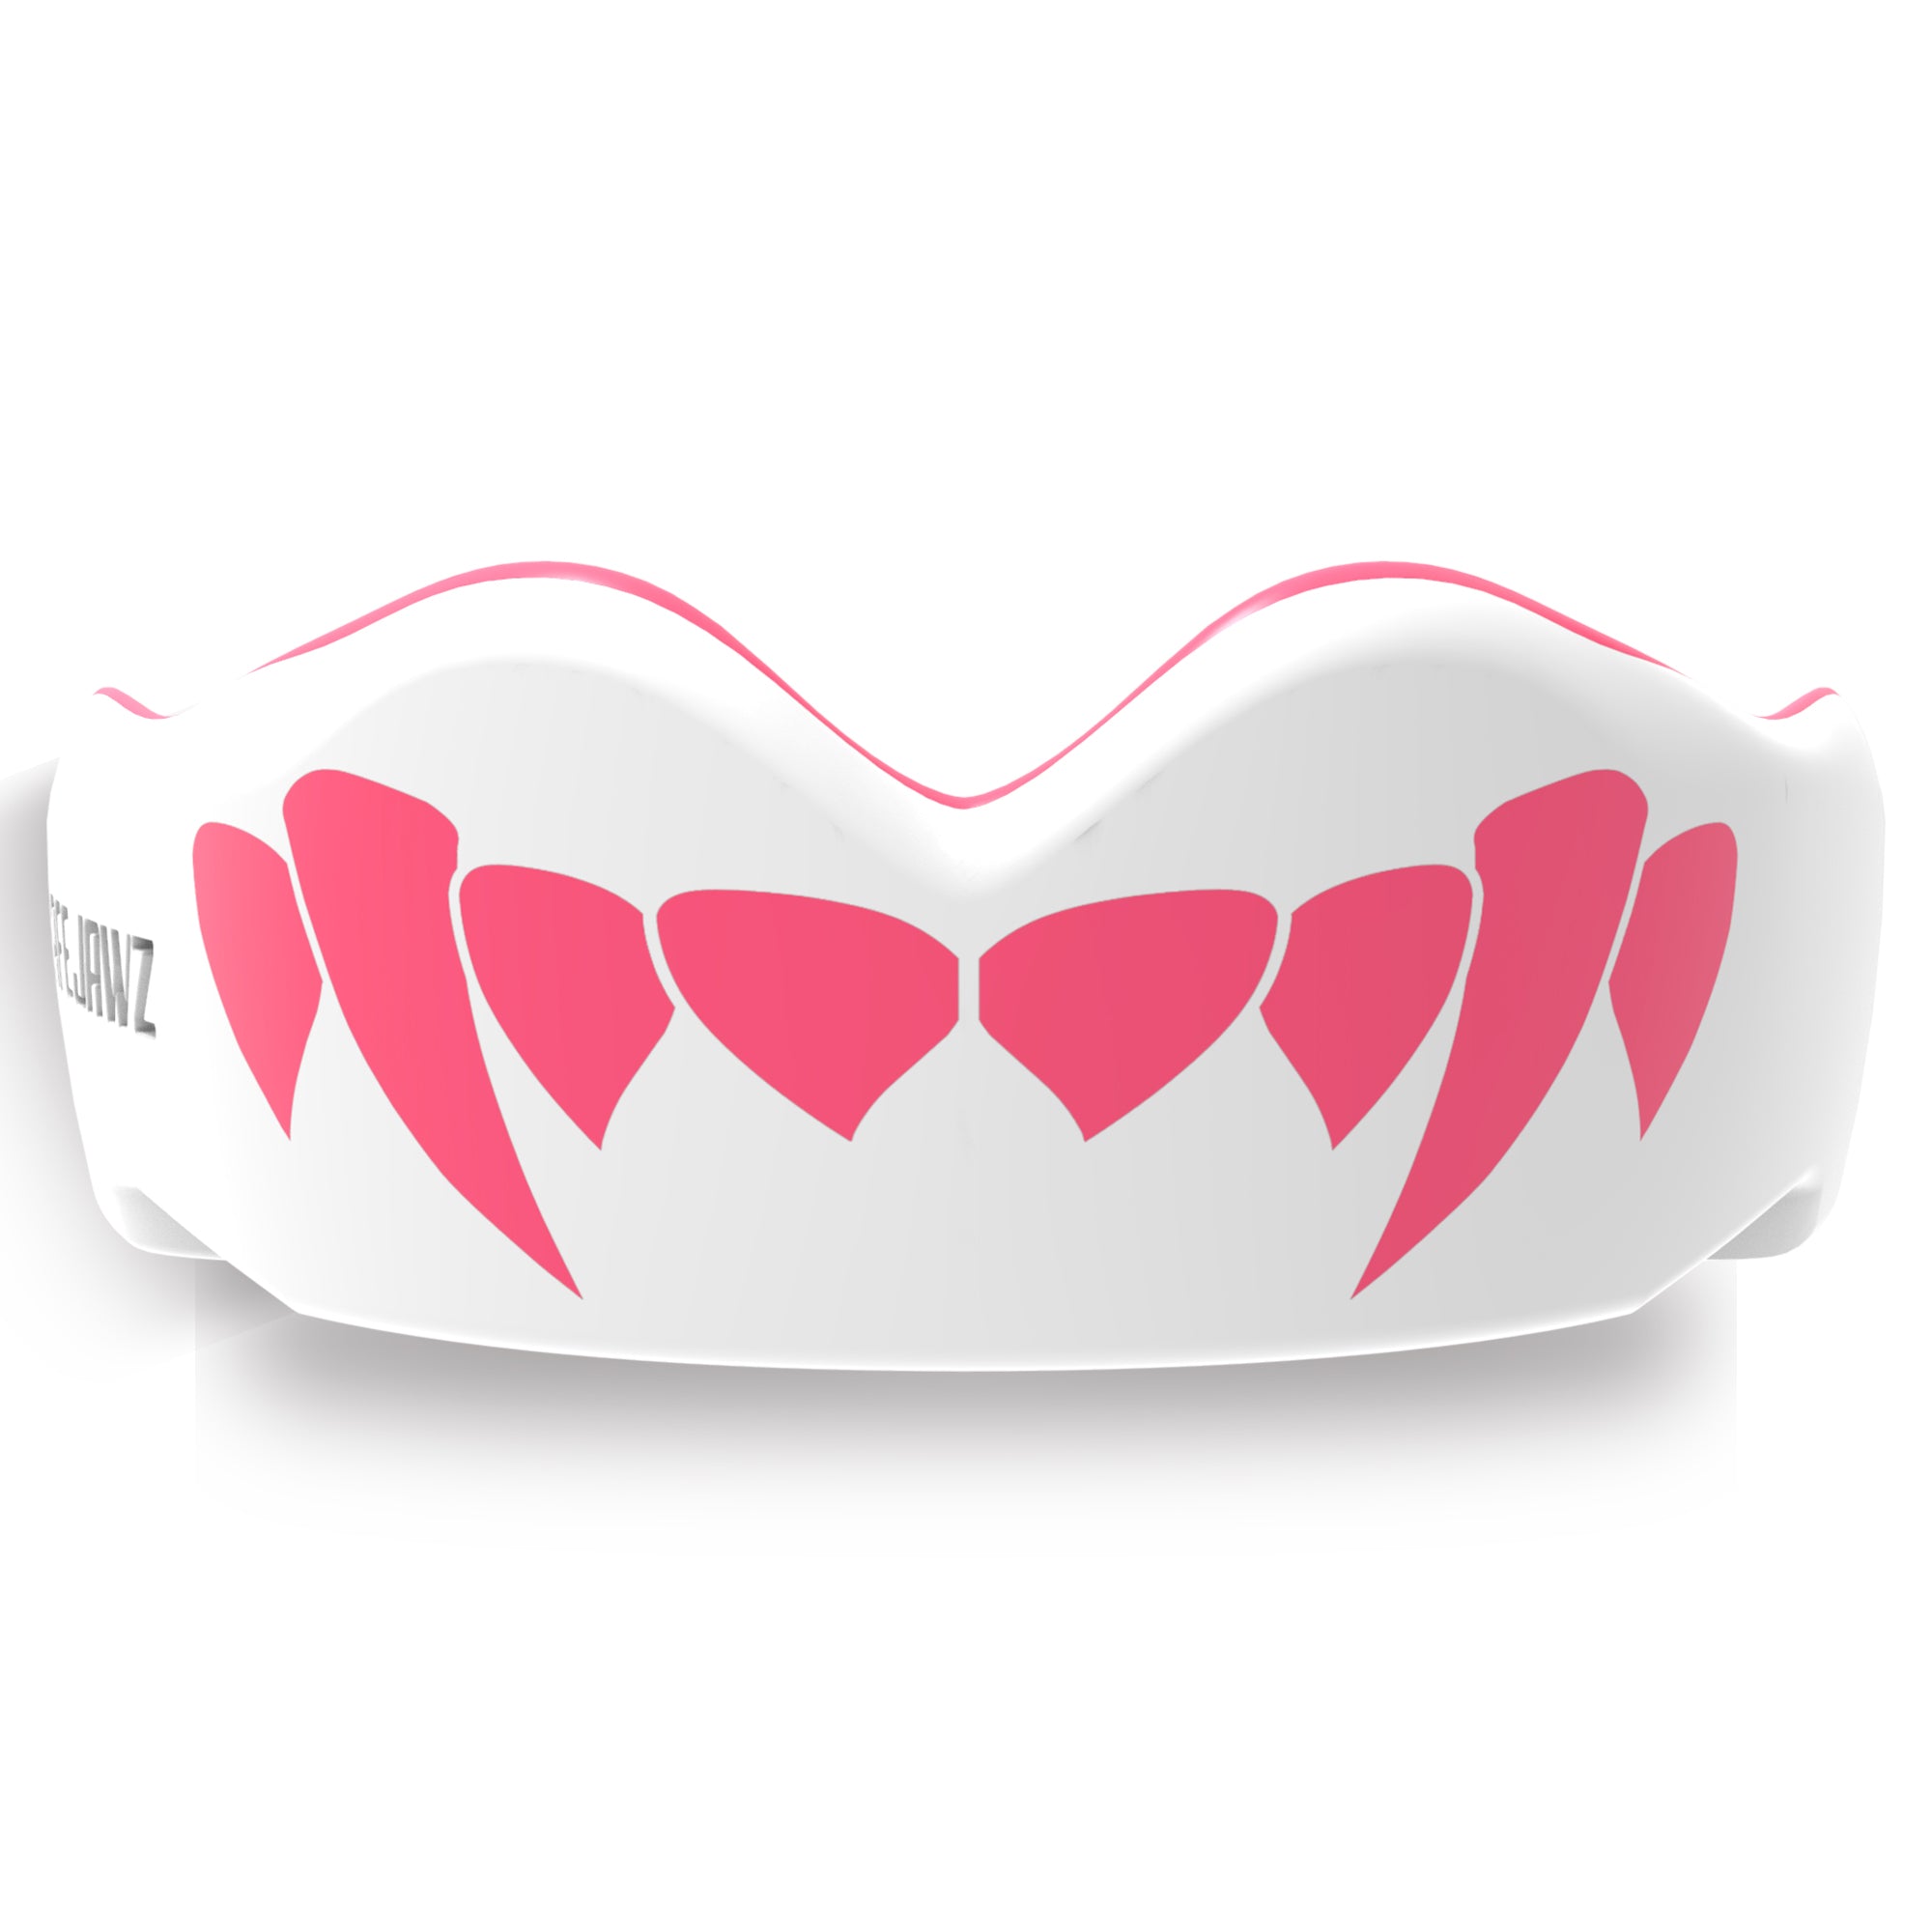 SAFEJAWZ® Extro Series 'Pink Fangz' Mouthguard - SAFEJAWZ gum shield